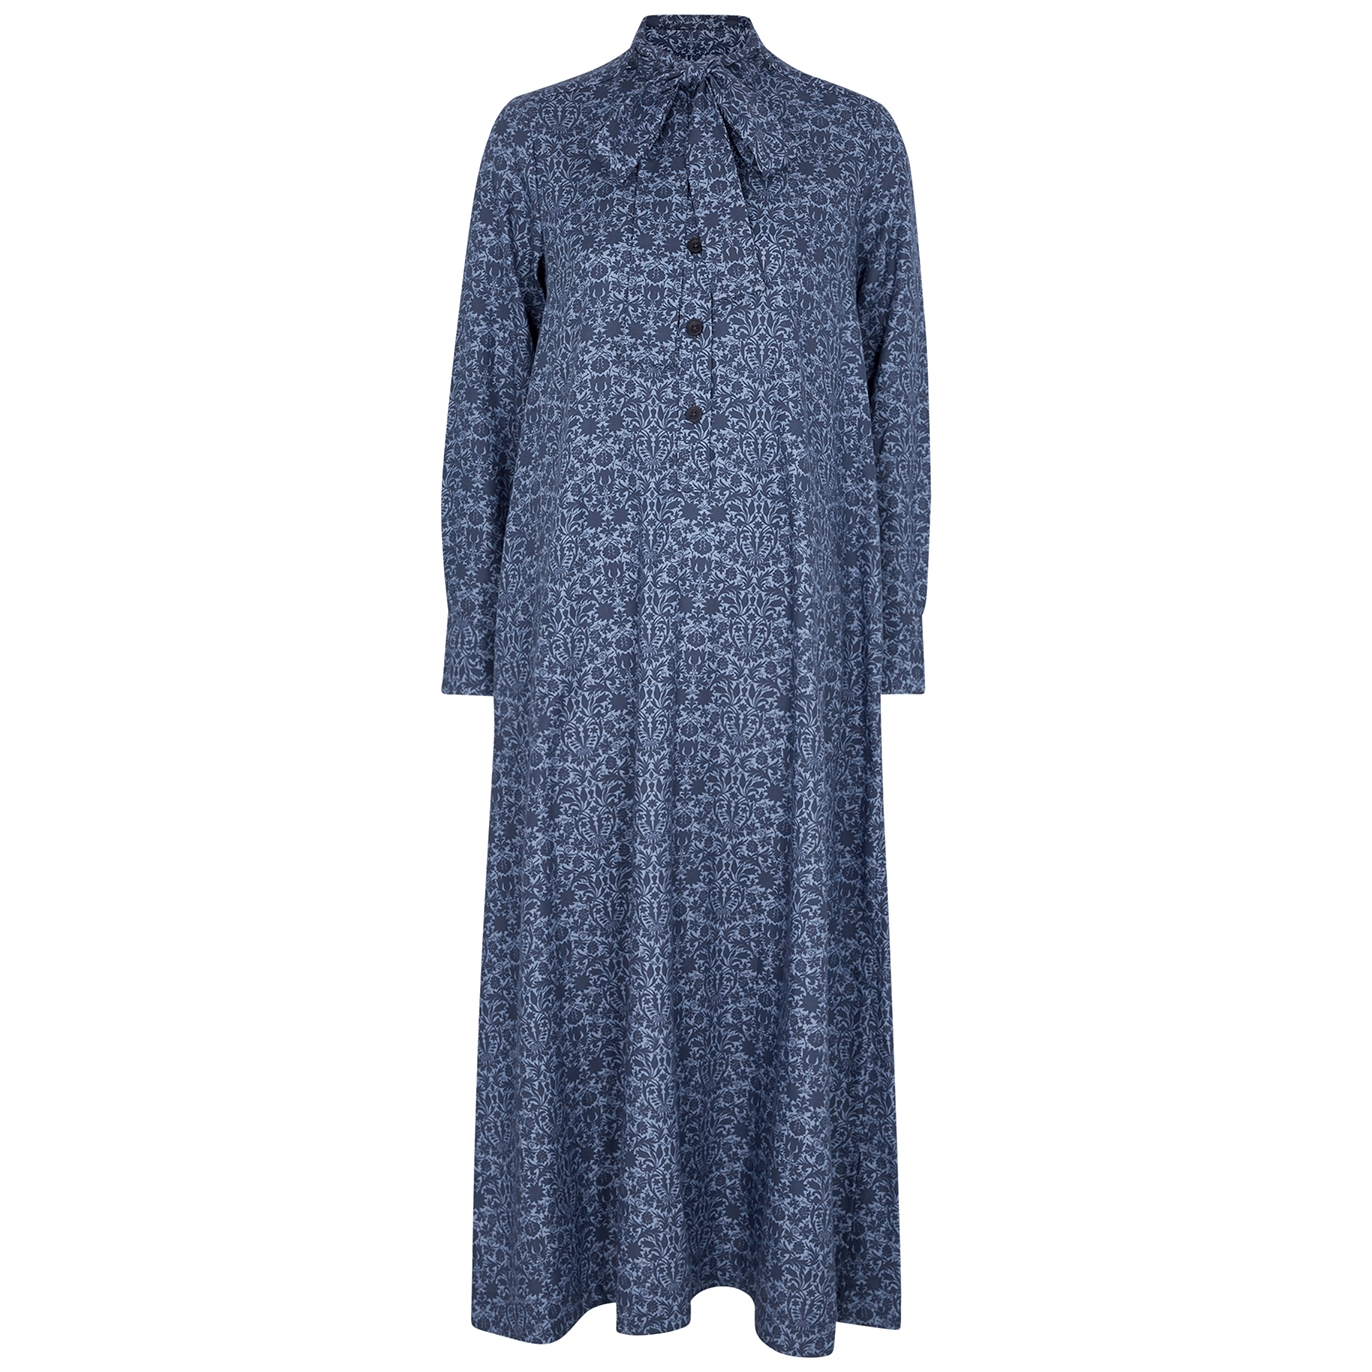 Apof Alberte Blue Printed Cotton-blend Dress - M